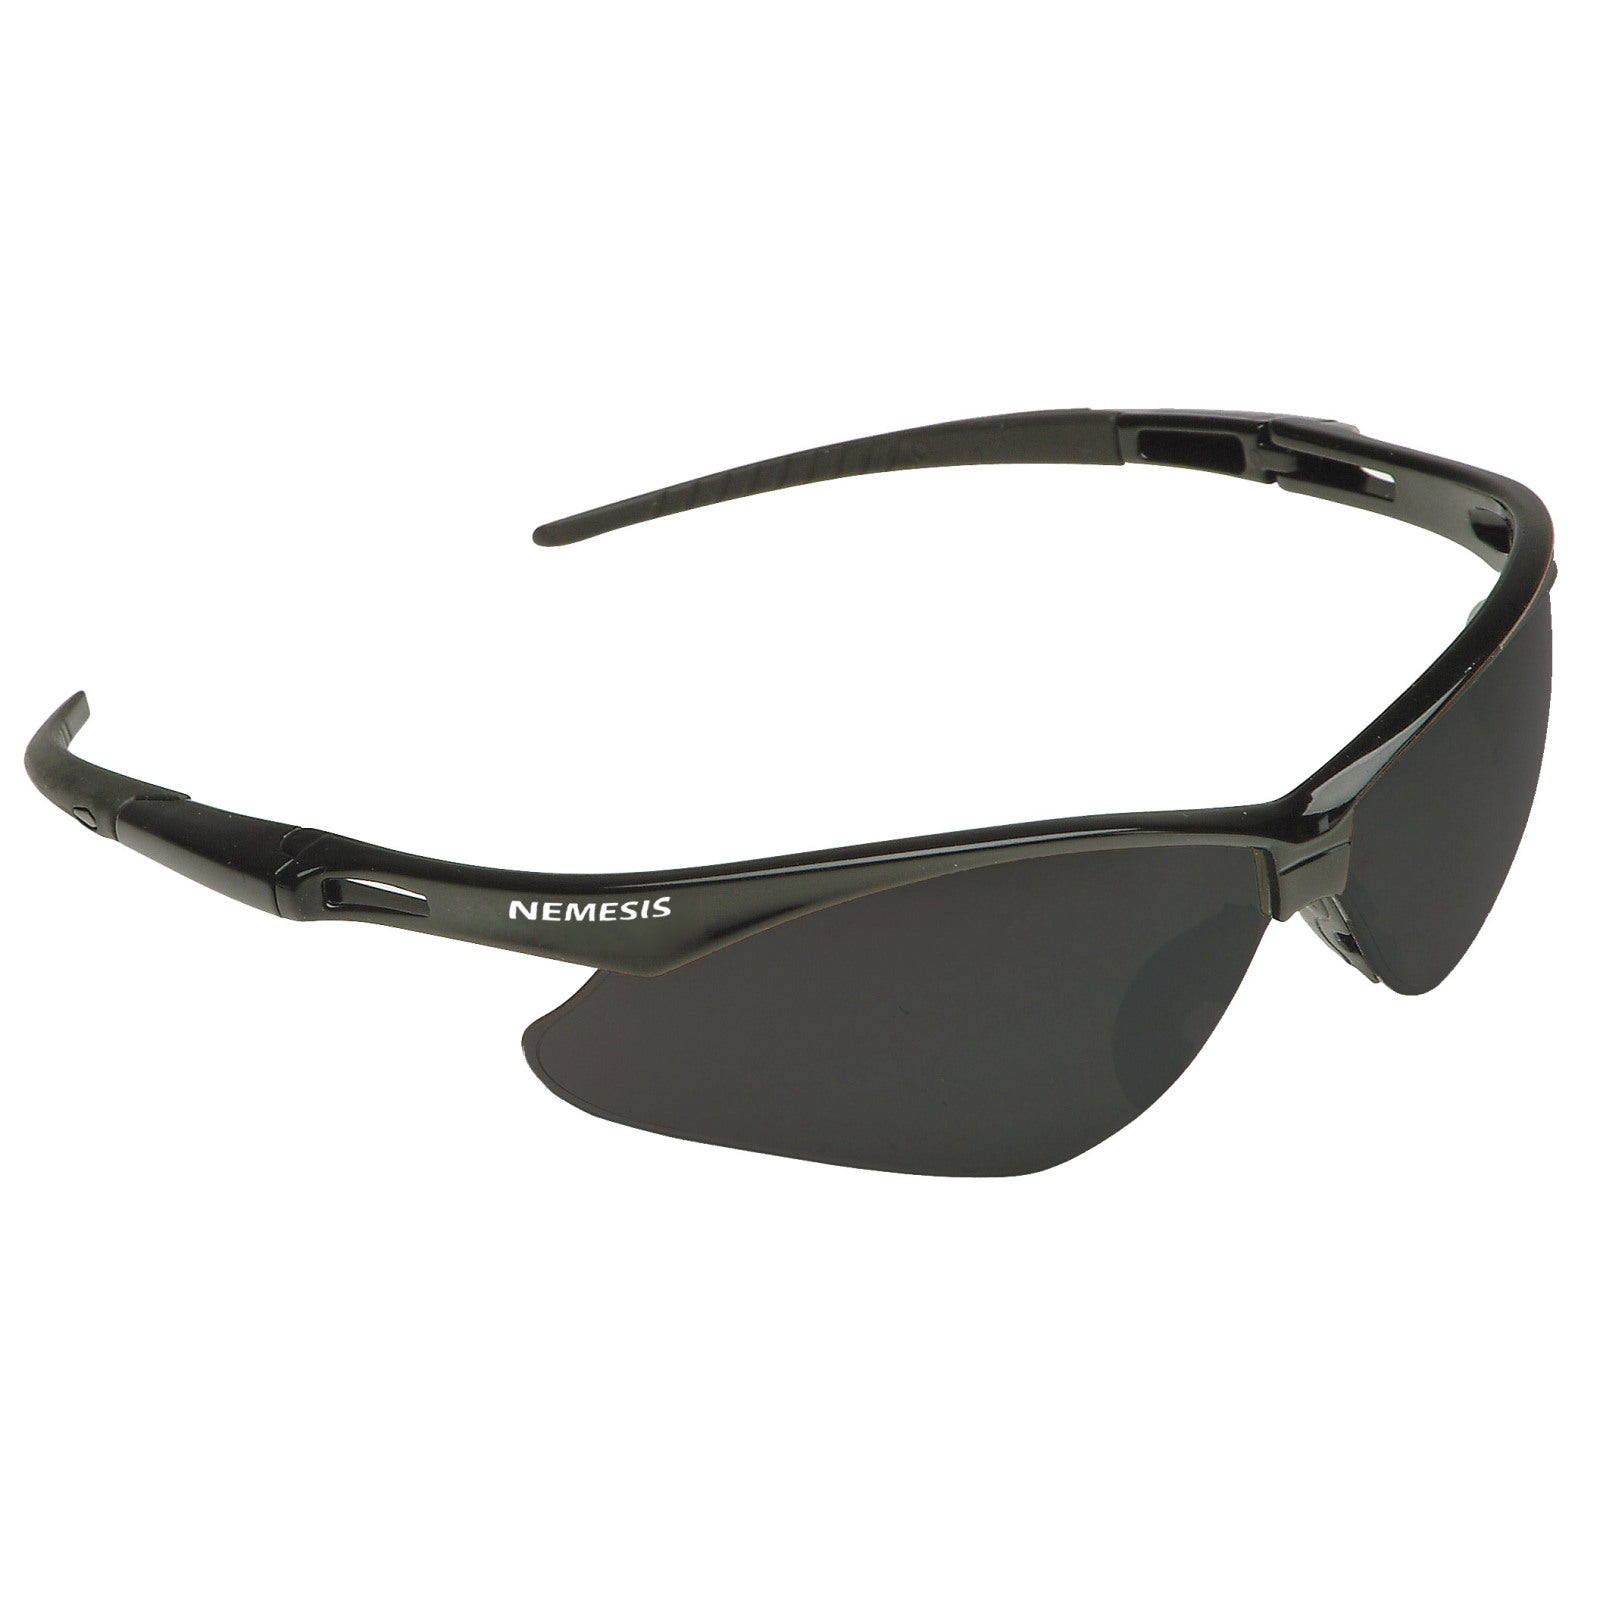 Jackson Nemesis Polarized Safety Glasses Smoke Lens, Black Frame (28635)